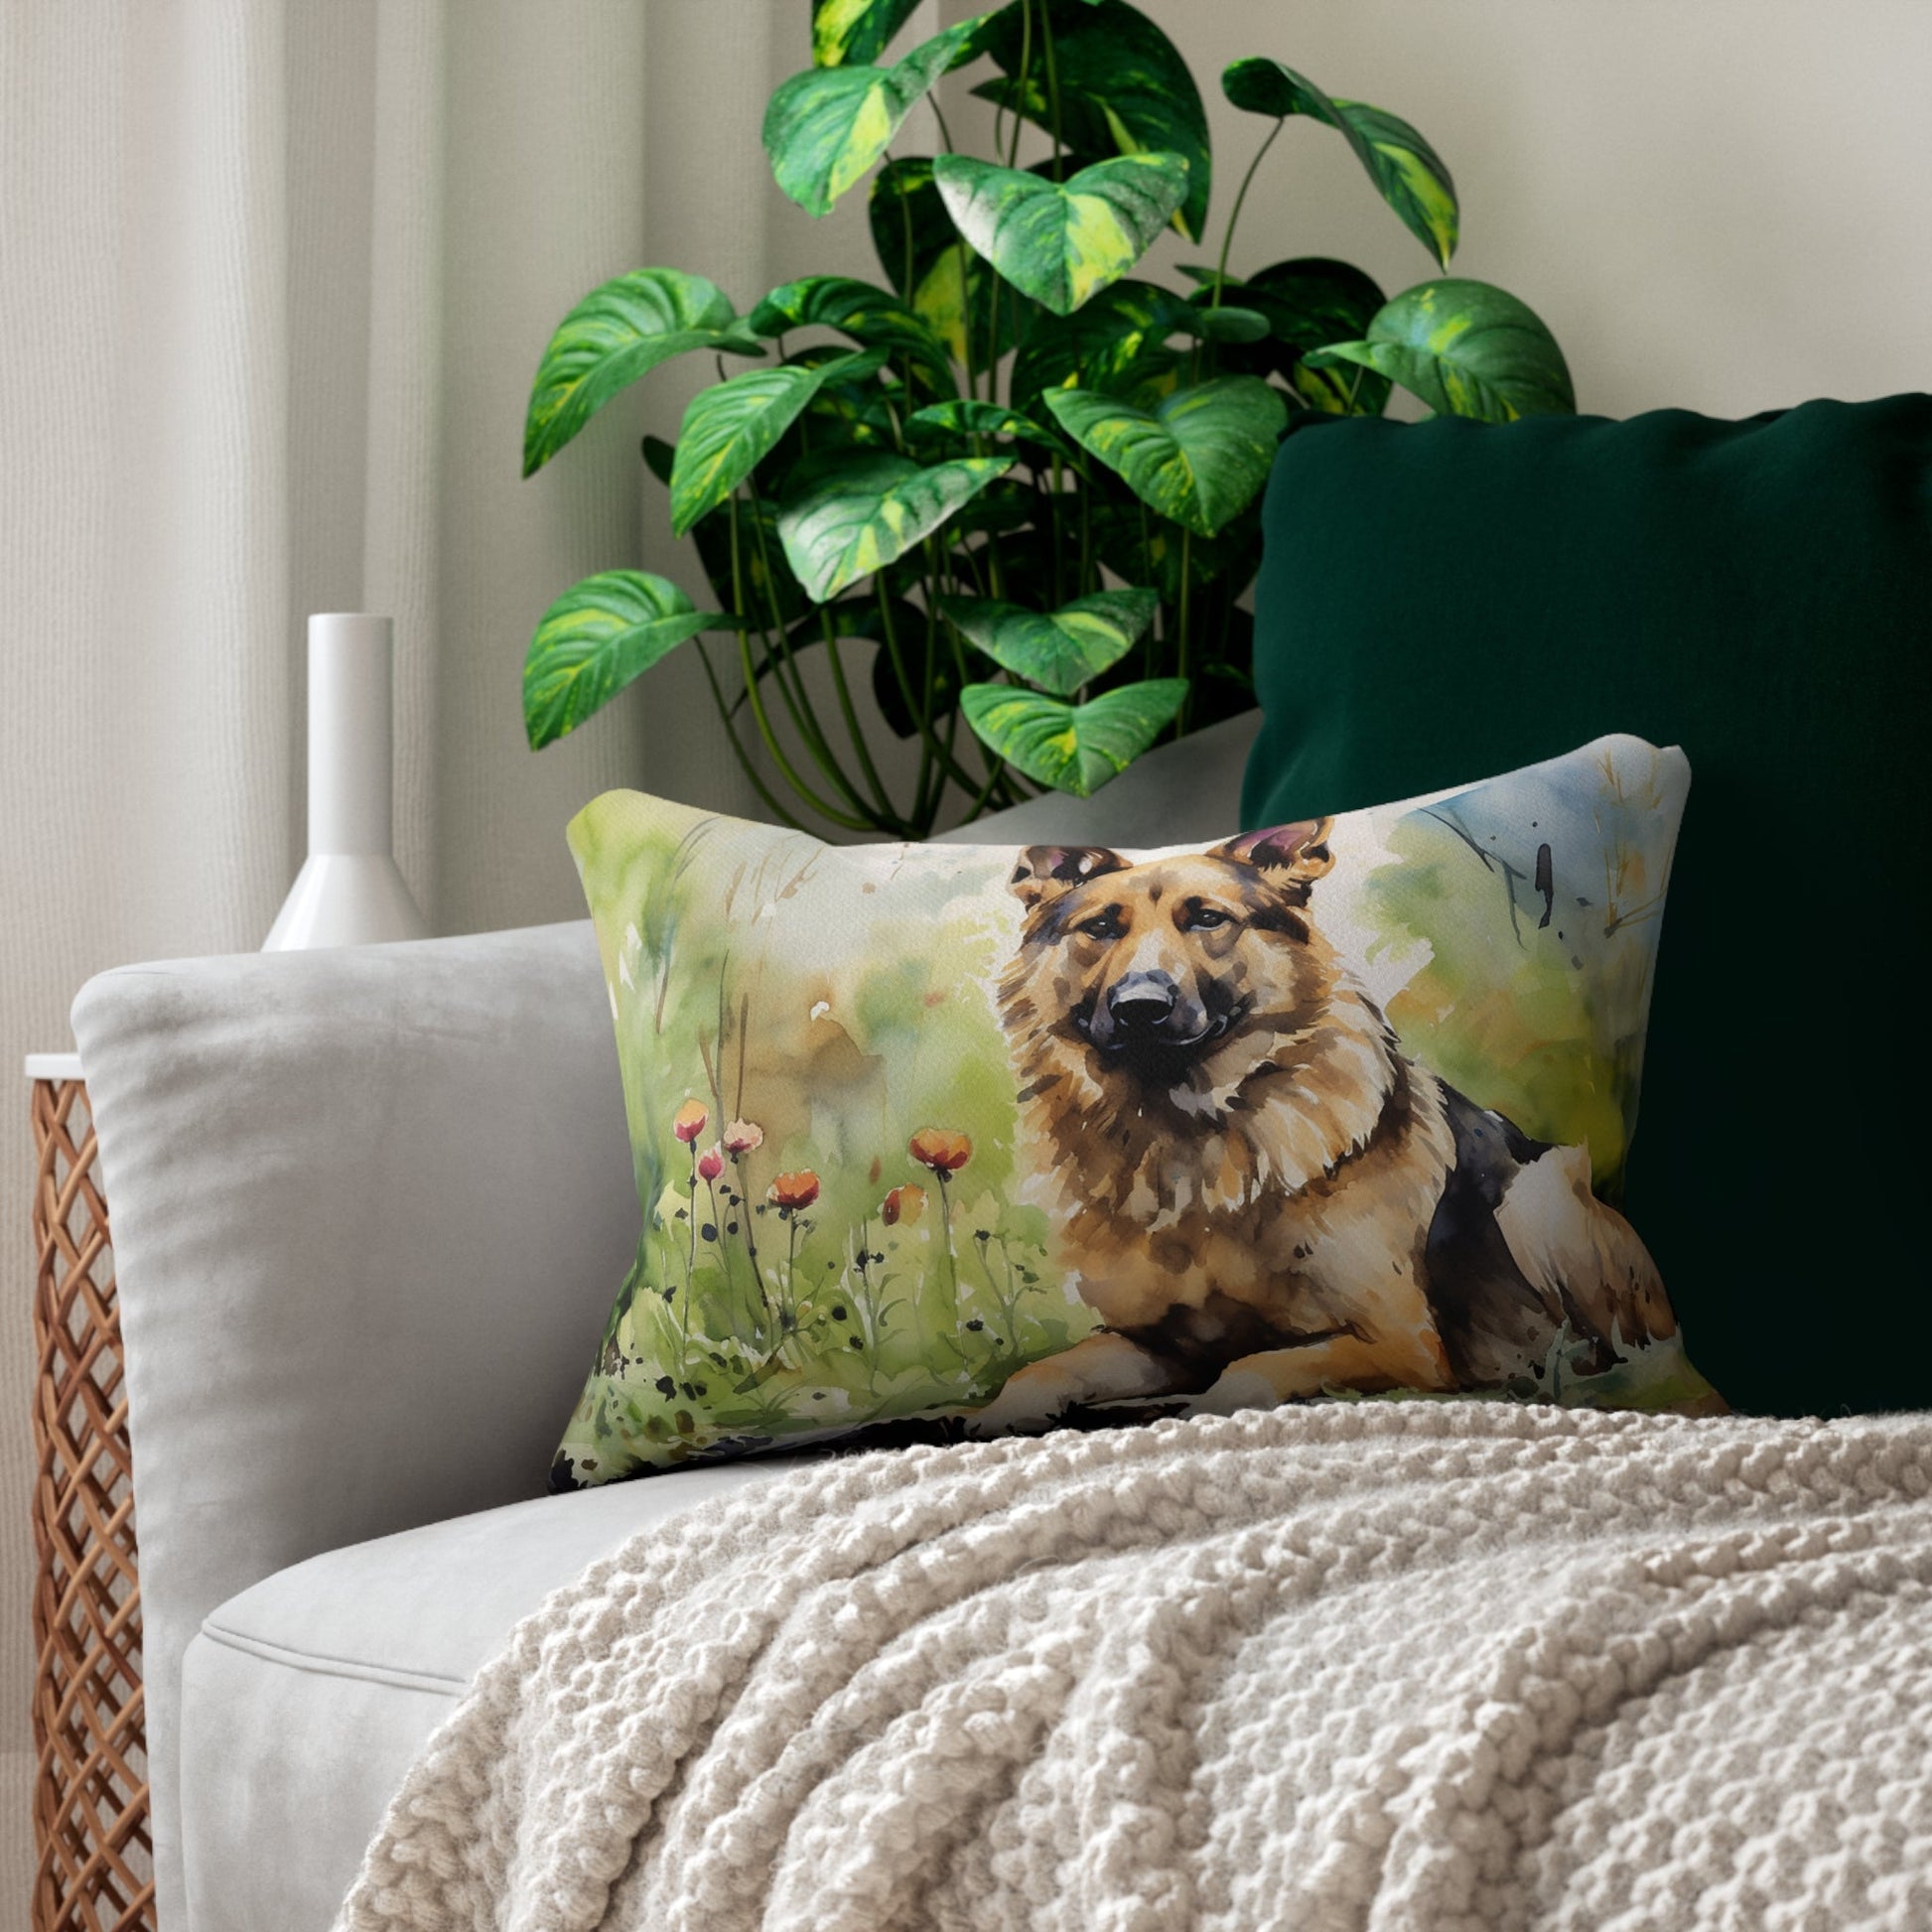 German Shepherd Dog Theme Throw Pillow, Loveable German Shepherd Lumbar Support, Decorative for Home Decor, Unique Accent, Wedding Gift - FlooredByArt